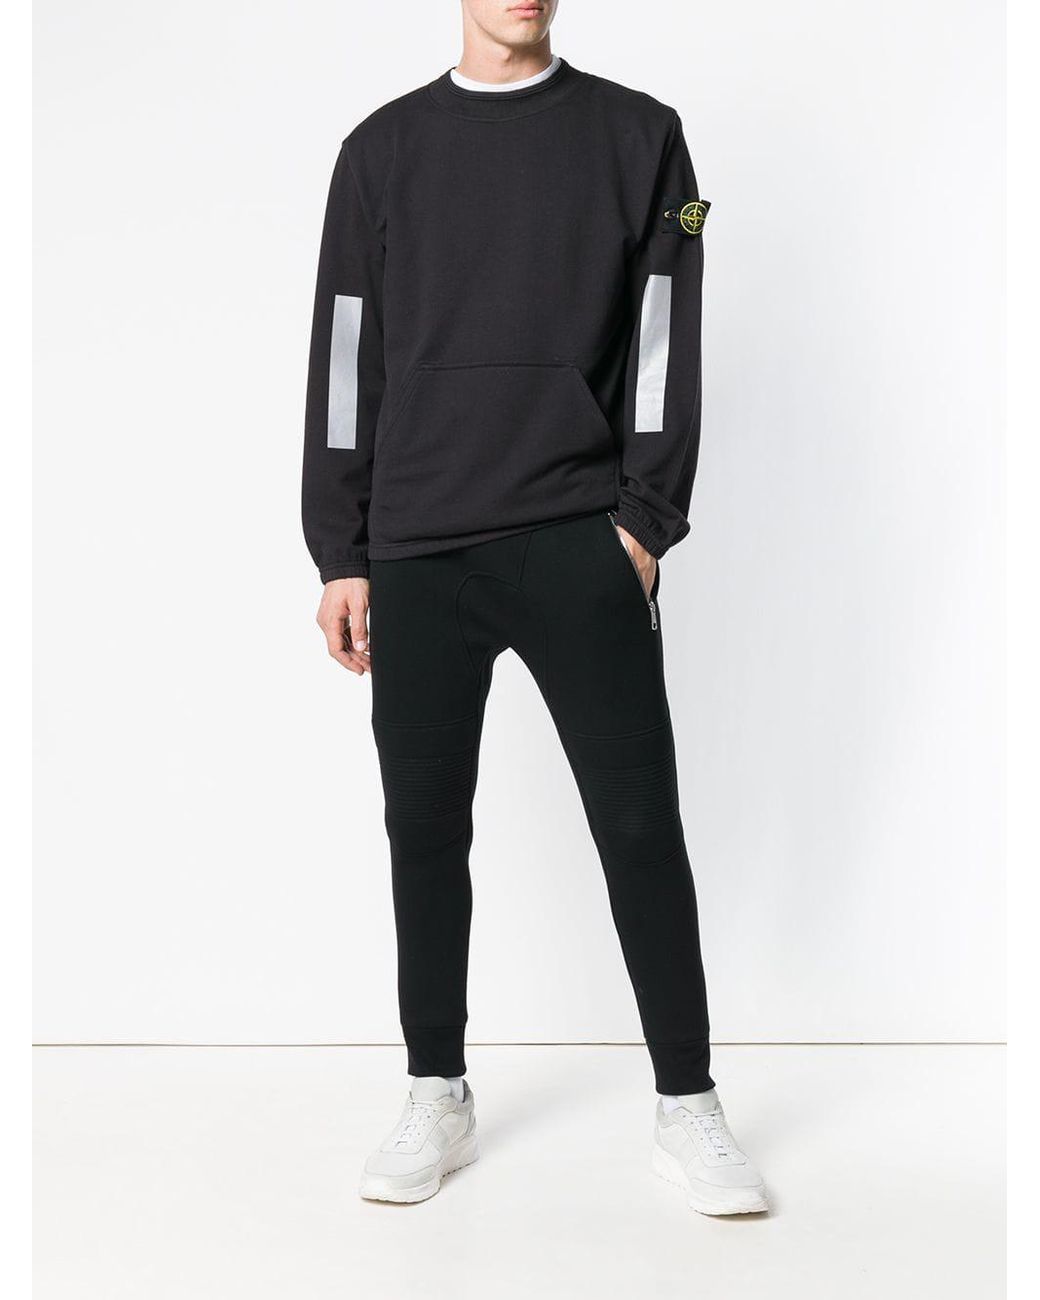 Stone Island Reflective Panel Sweatshirt in Black for Men | Lyst Canada